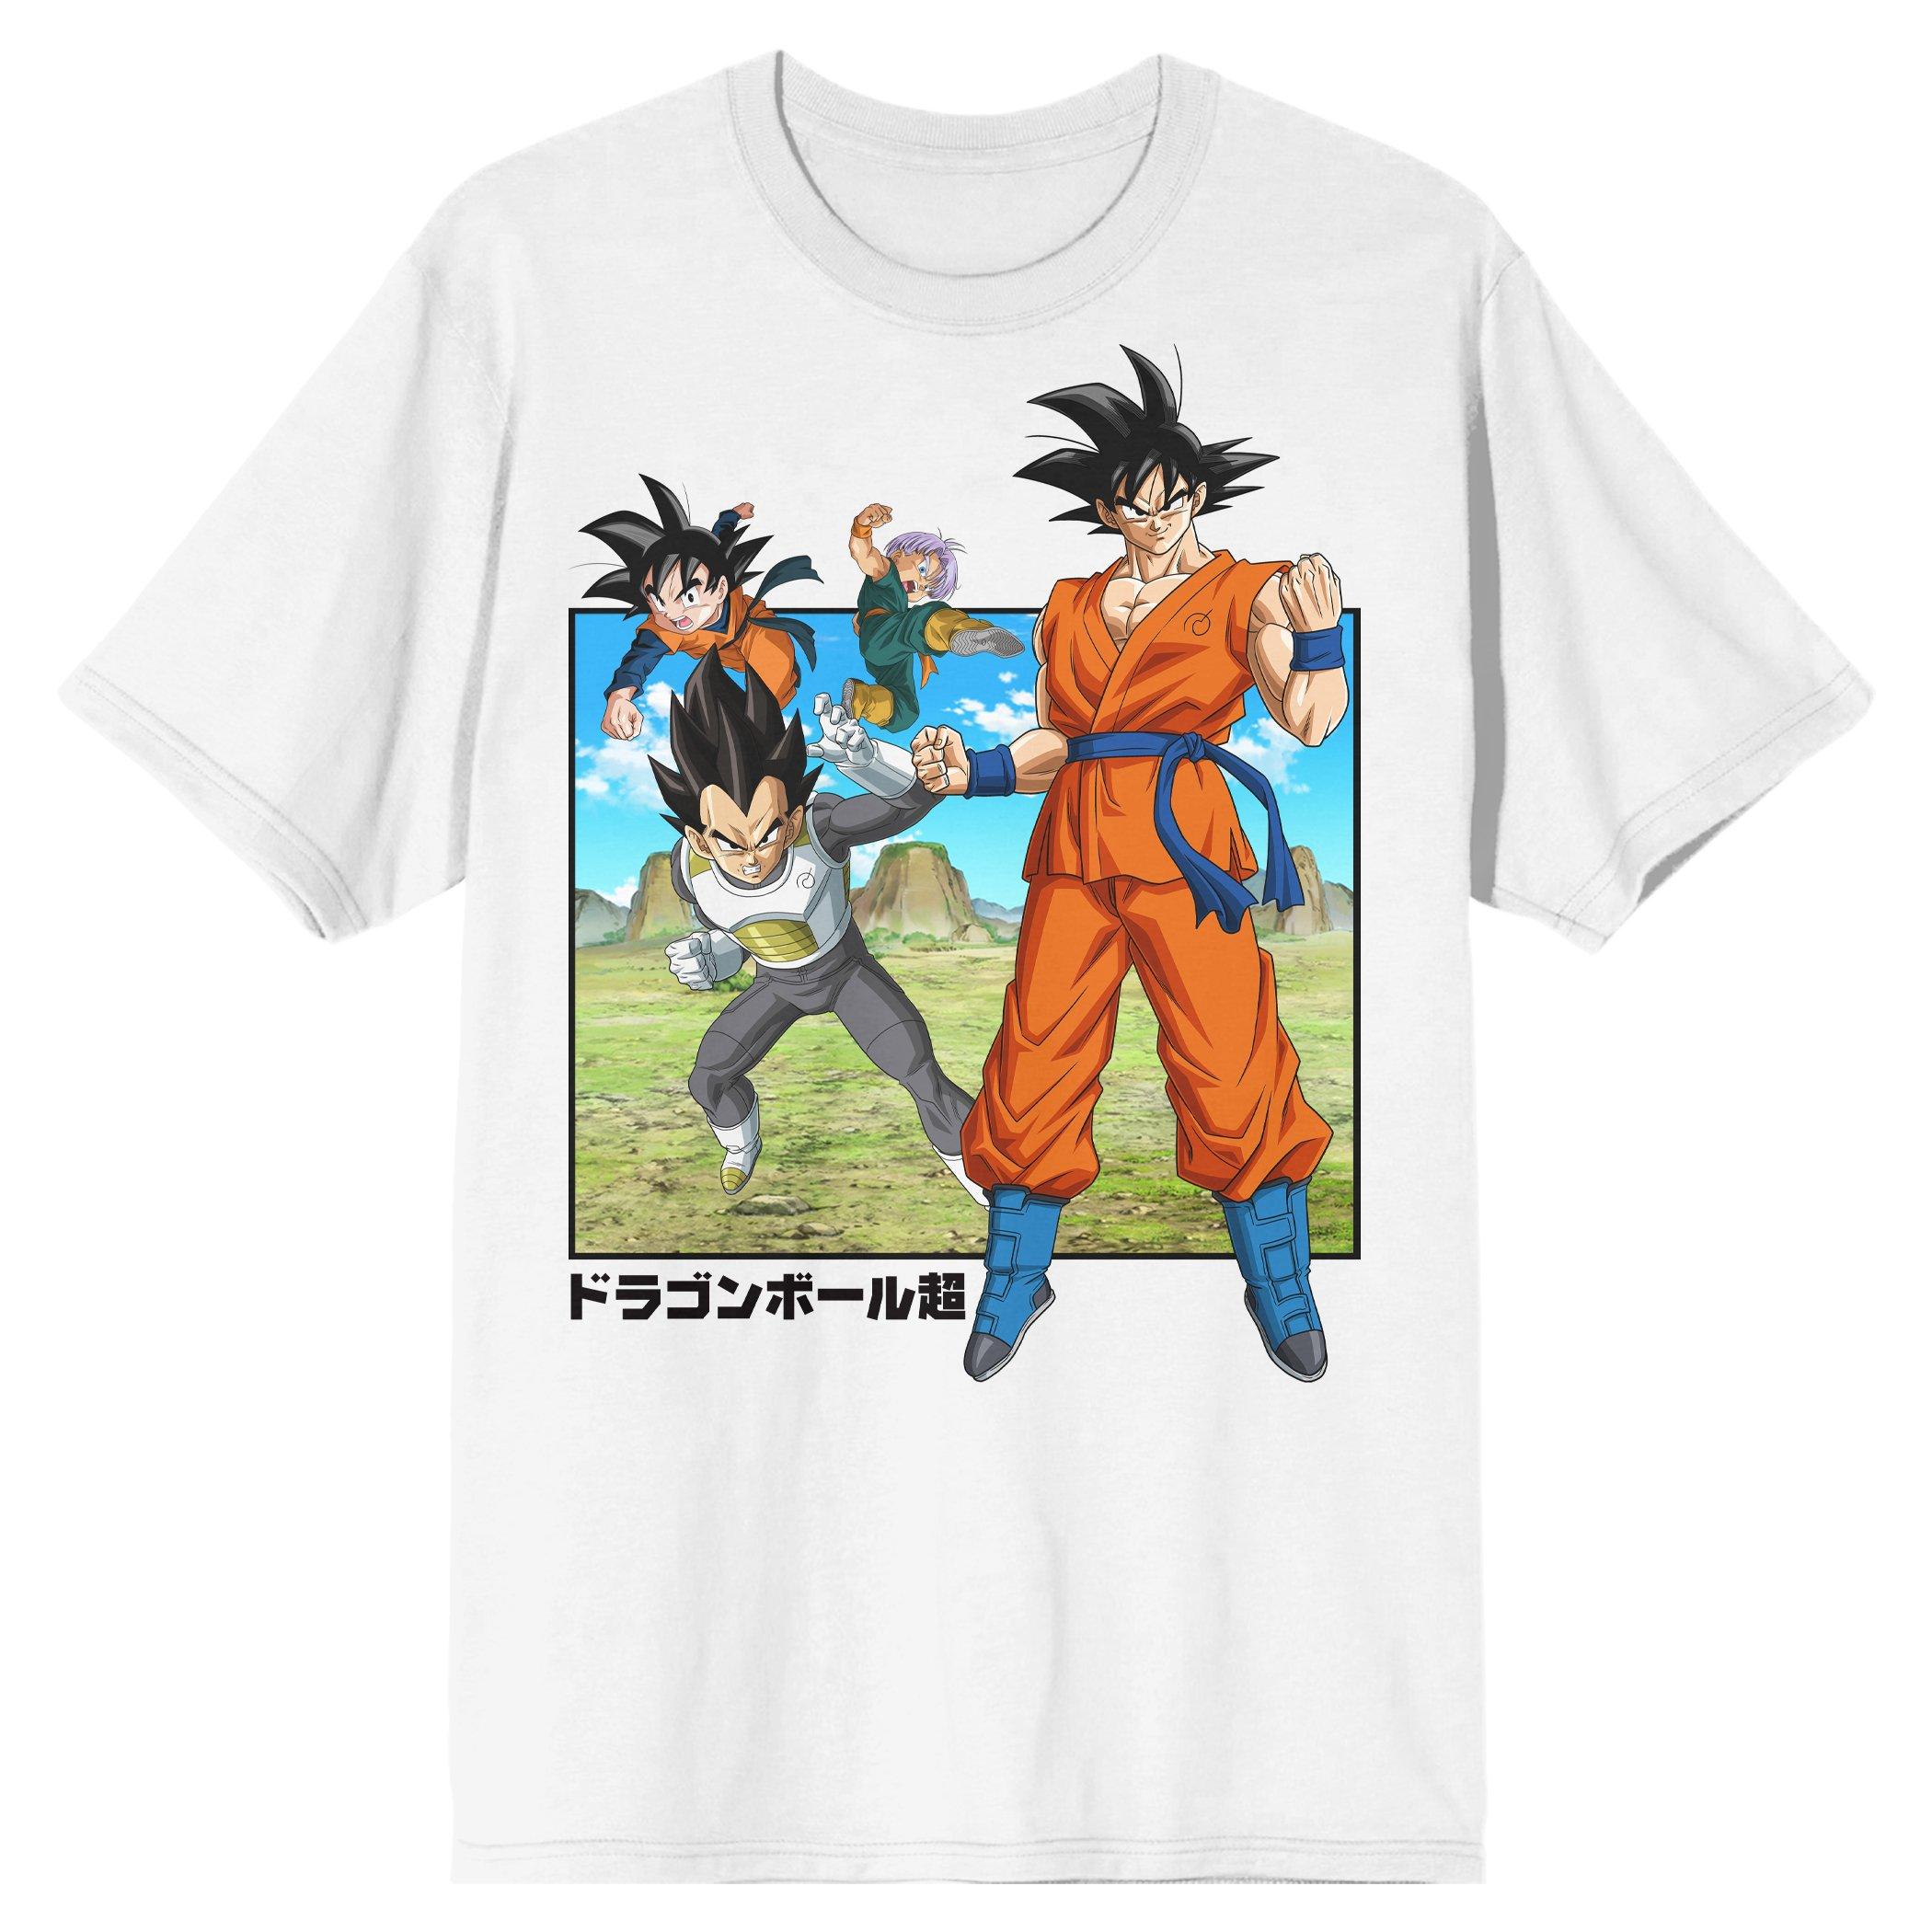 Dragon Ball Super Character Group Graphic Men's White T-Shirt